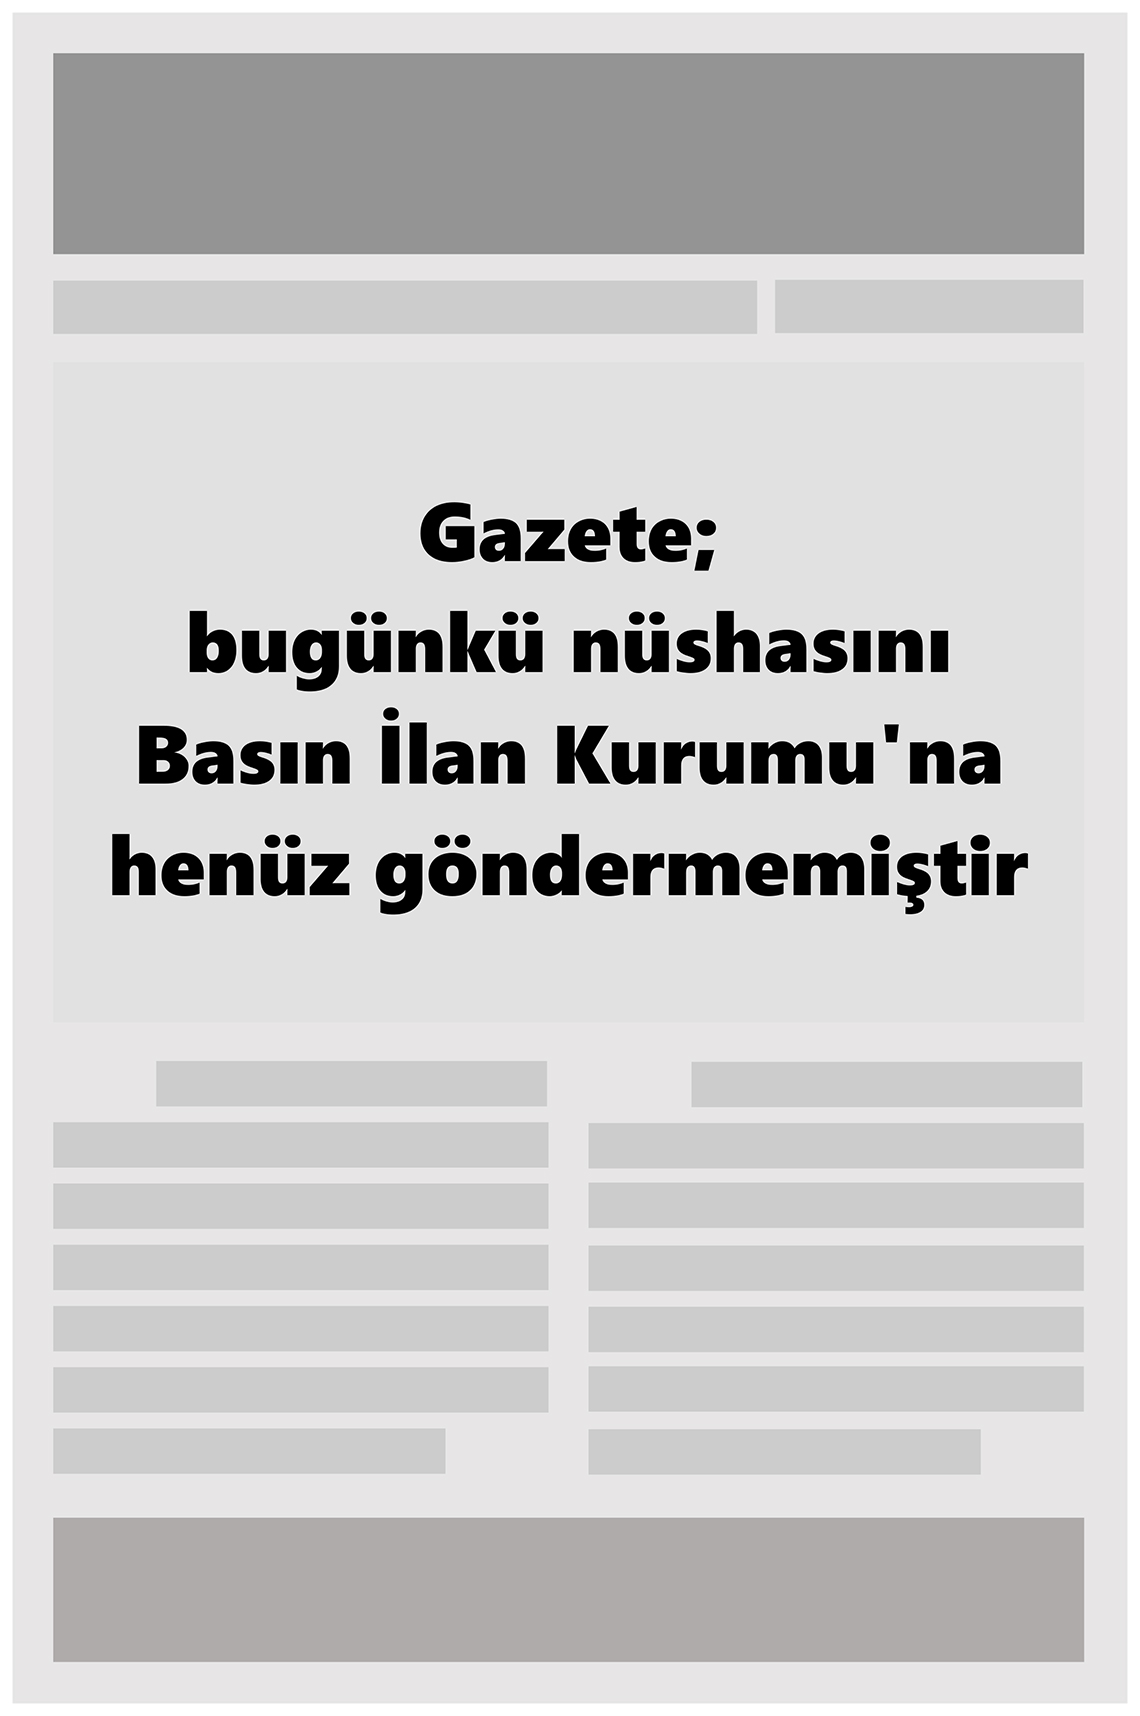 14 Ağustos 2022 Yüksekova Halkın Sesi Gazete Manşeti